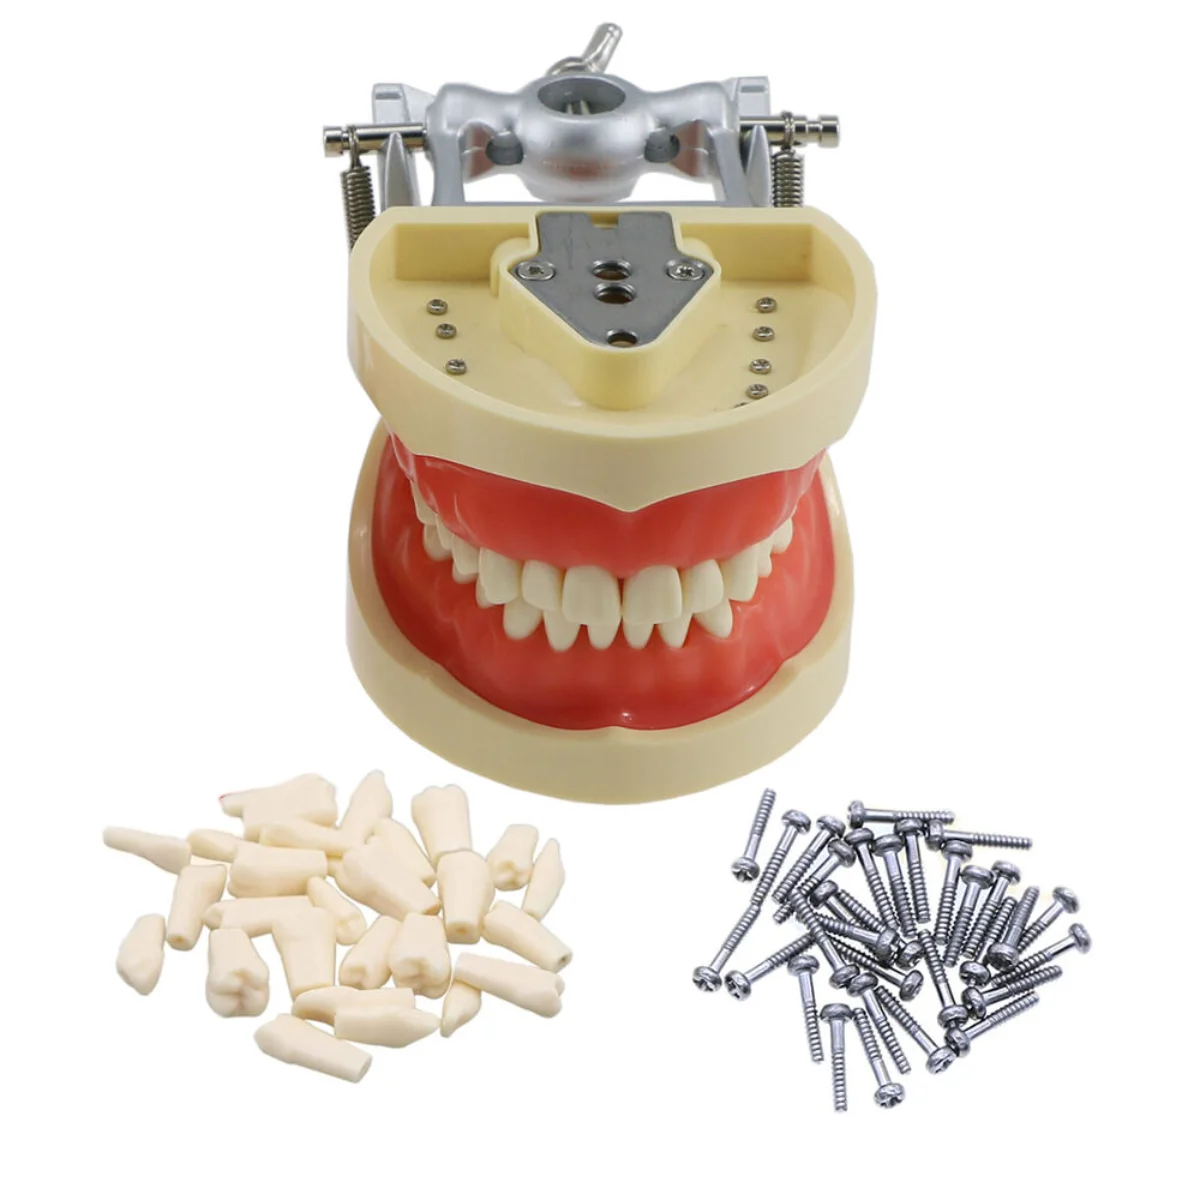 Dental Typodont Model 32 Removable Screw-in Teeth Soft Gums for Kilgore Nissin